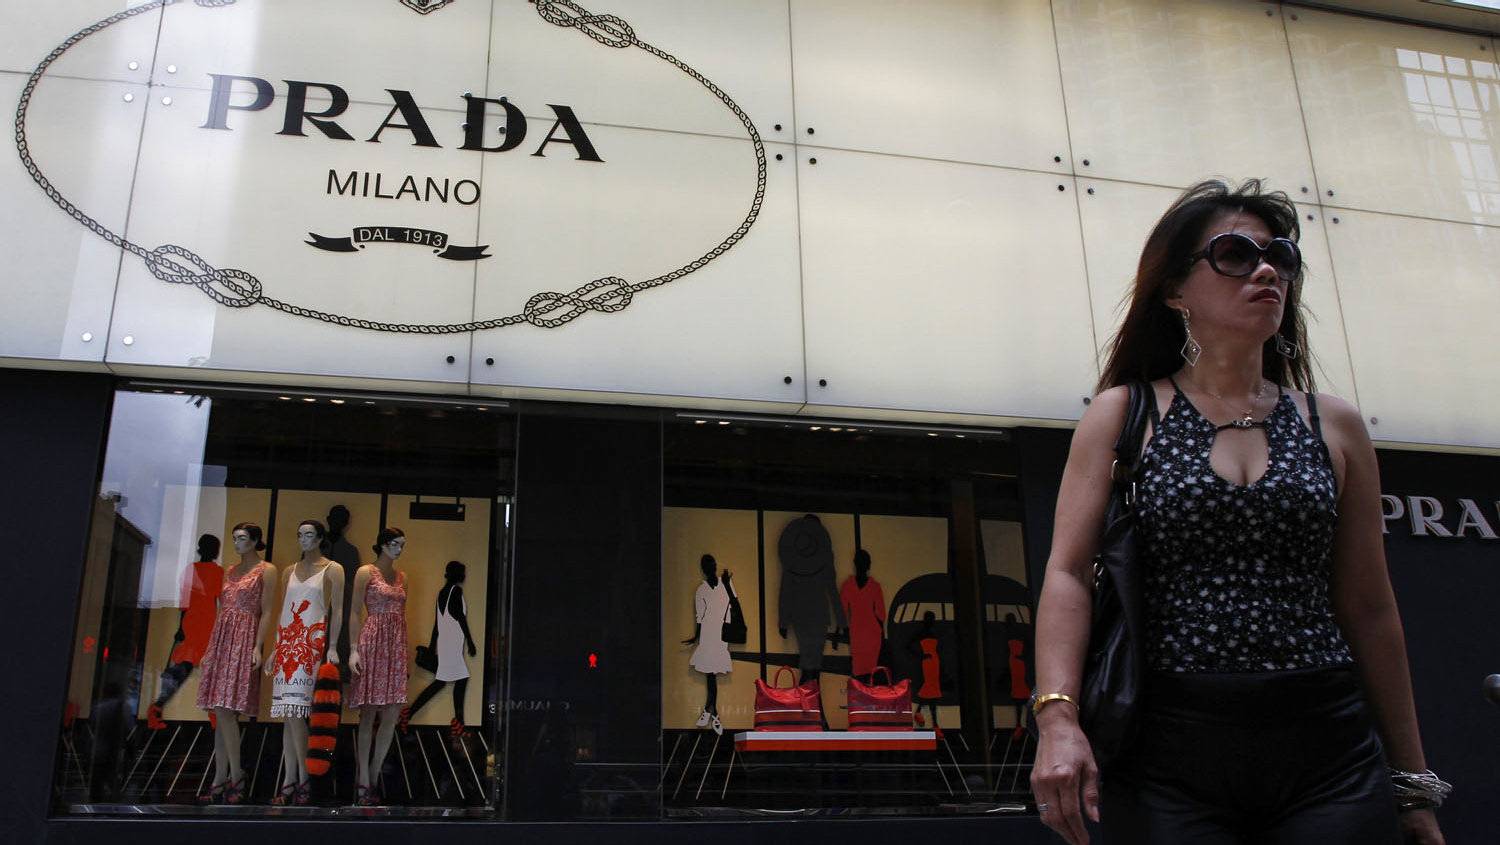 Prada's $ IPO plan puts it above peers - The Globe and Mail